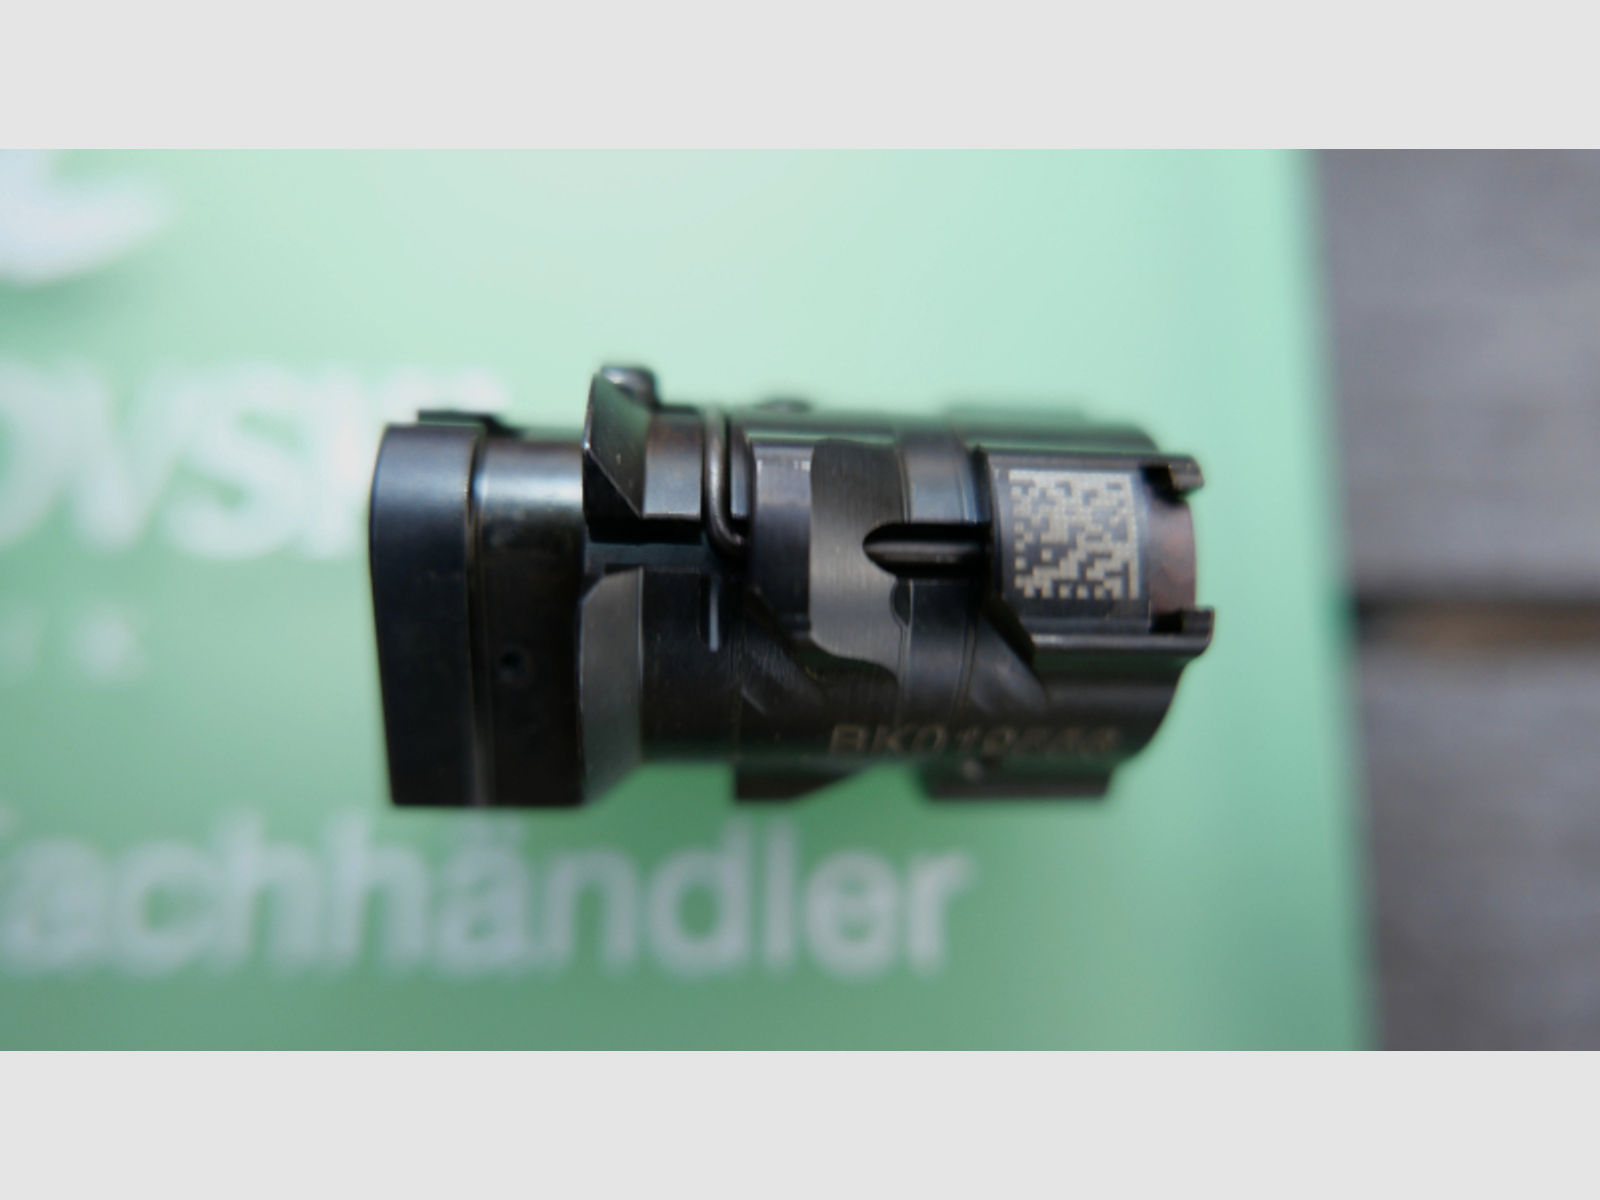 Sauer 404 Verschluss / Verschlusskopf, medium Kaliber , NEU, von TEAM-CEMA.DE